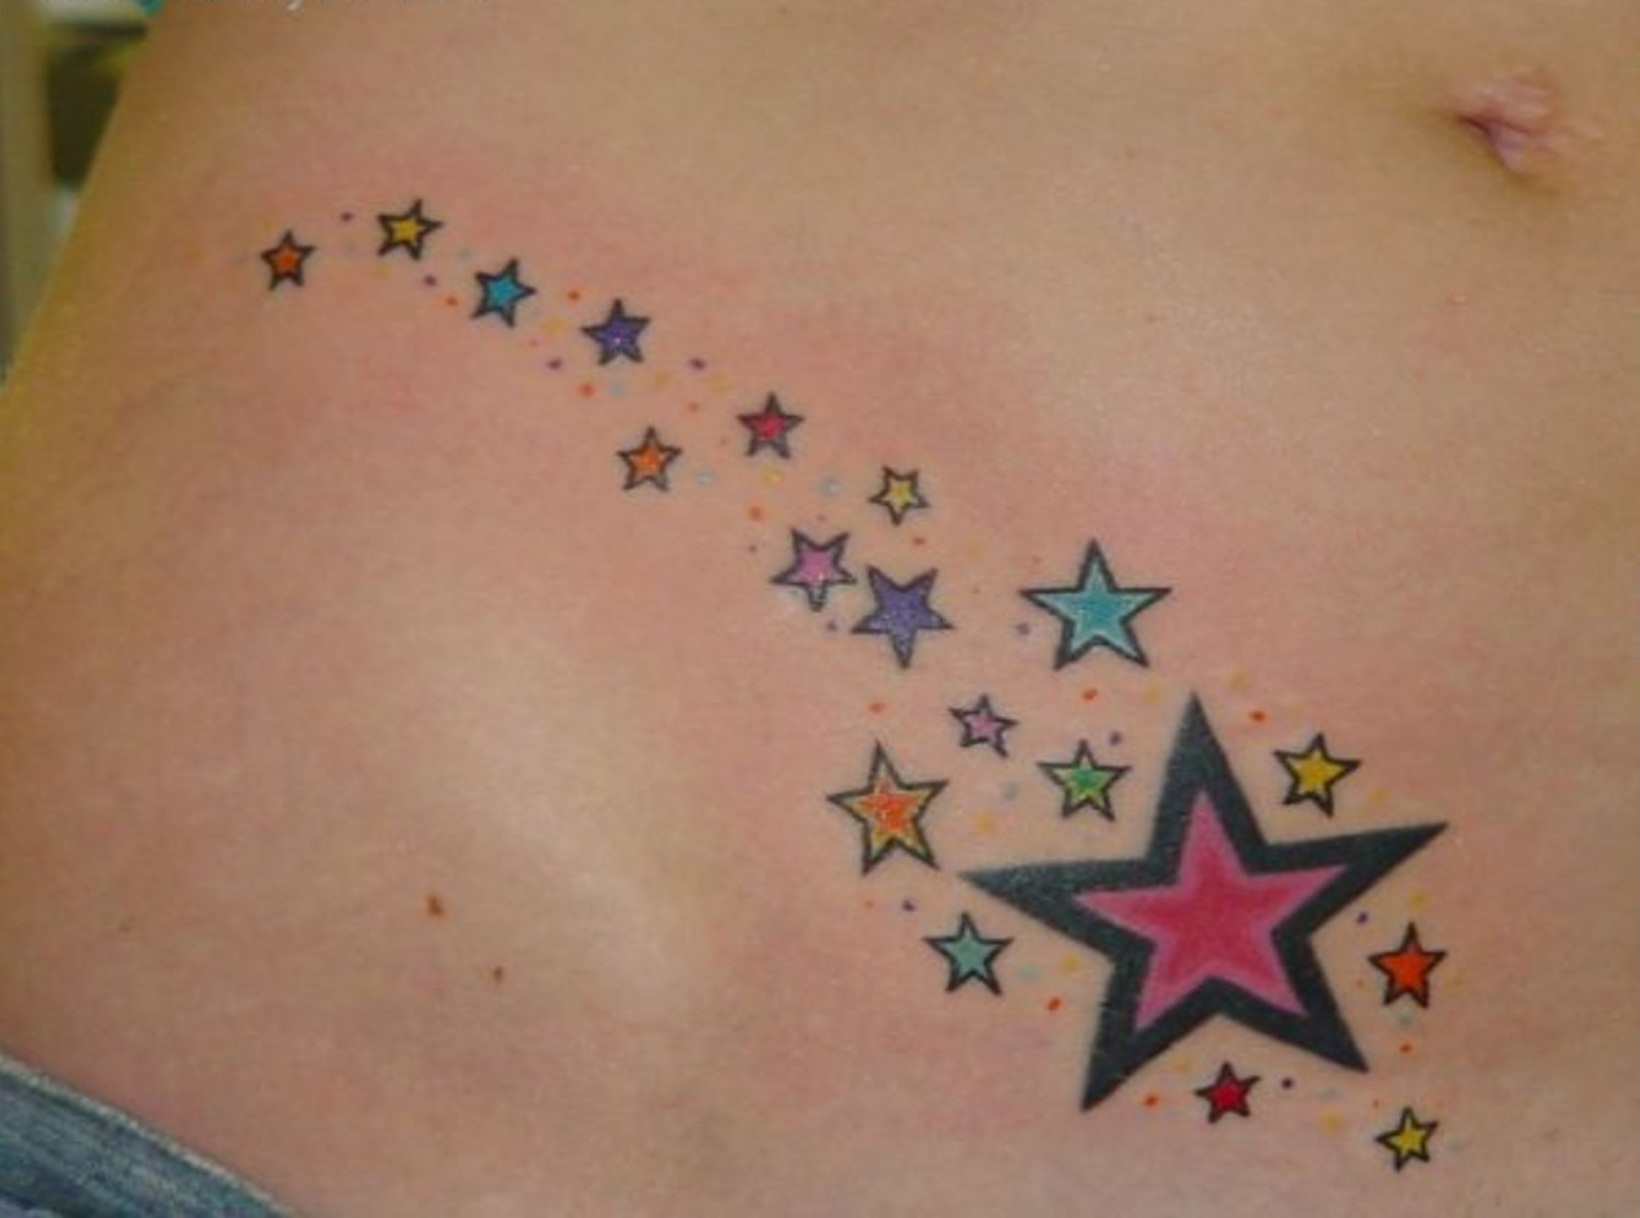 4. Star Tattoo Designs for Women's Wrist - wide 7